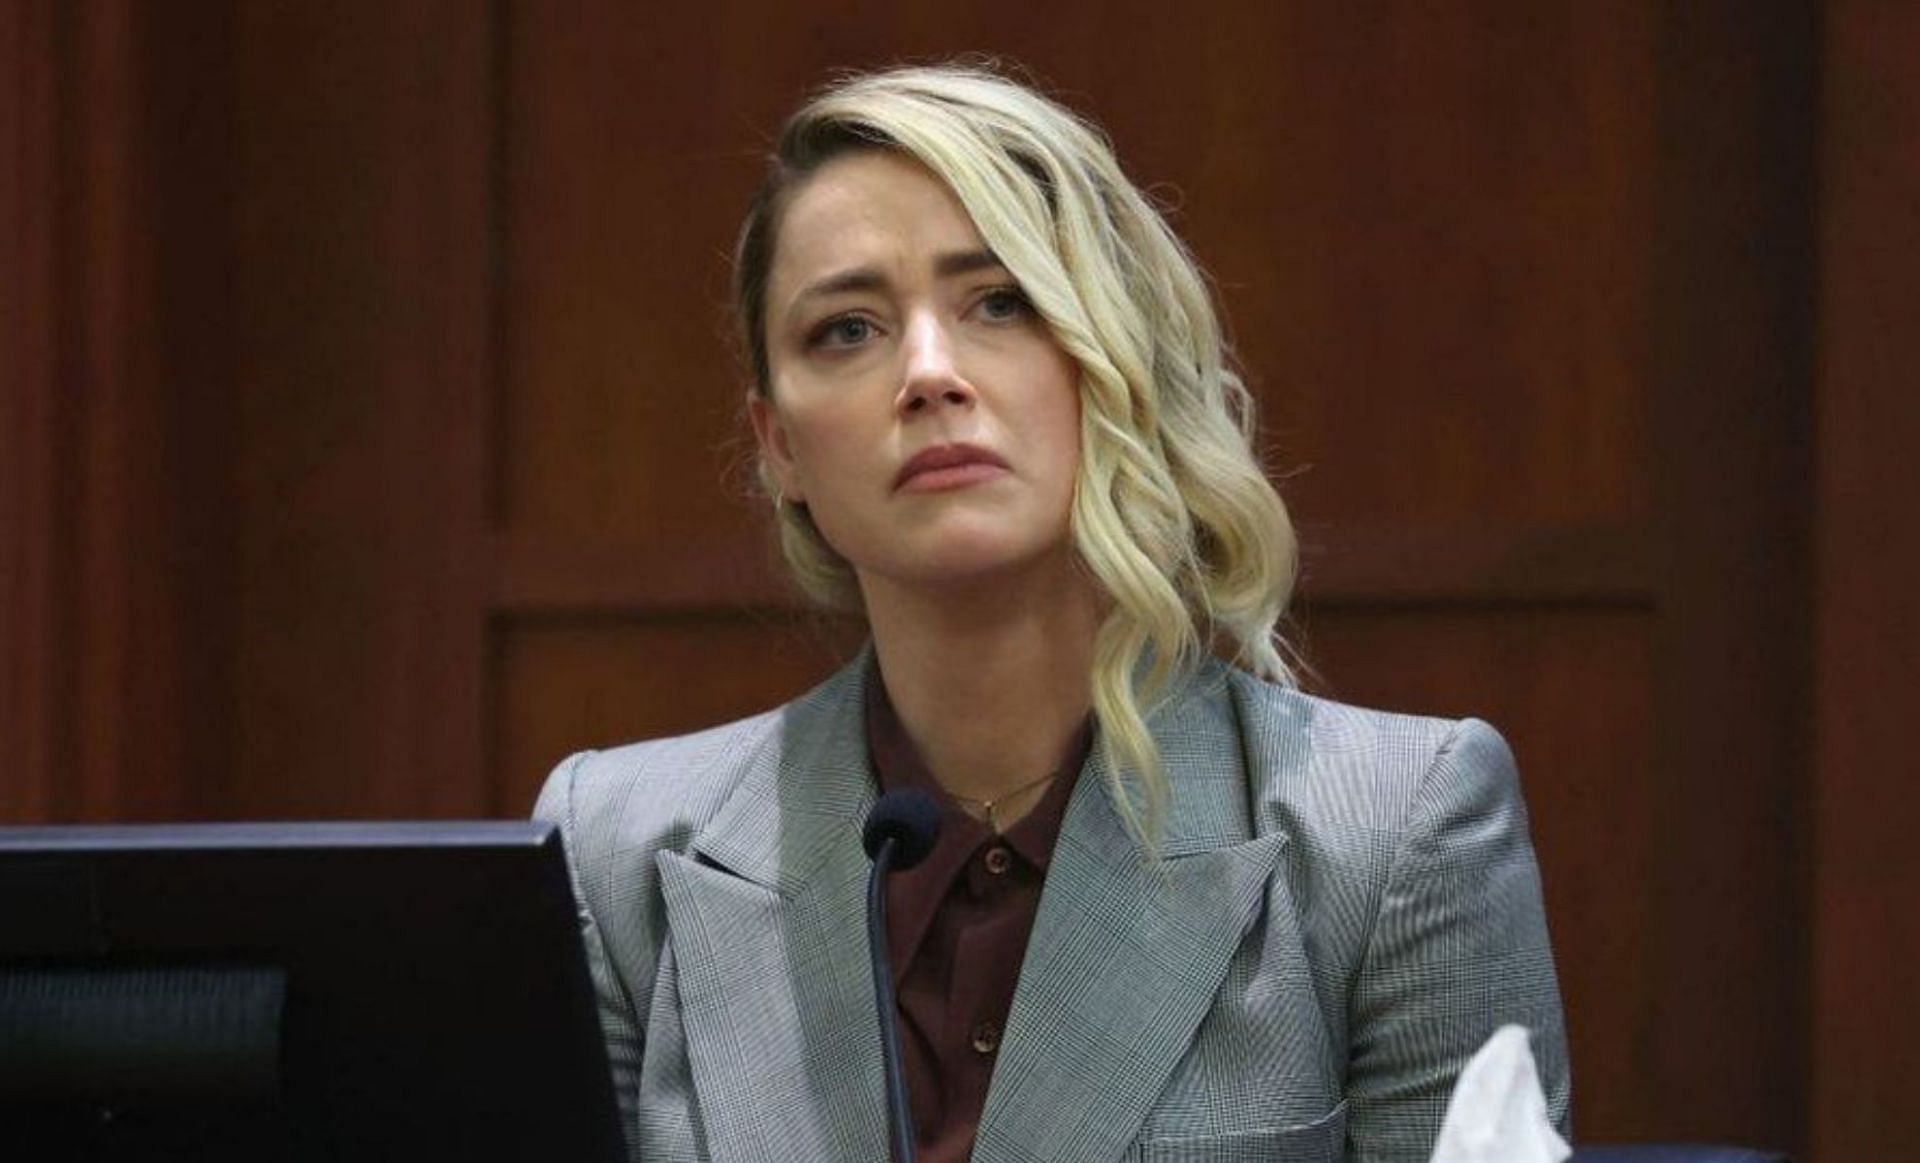 Amber Heard in court (Image via BBC)